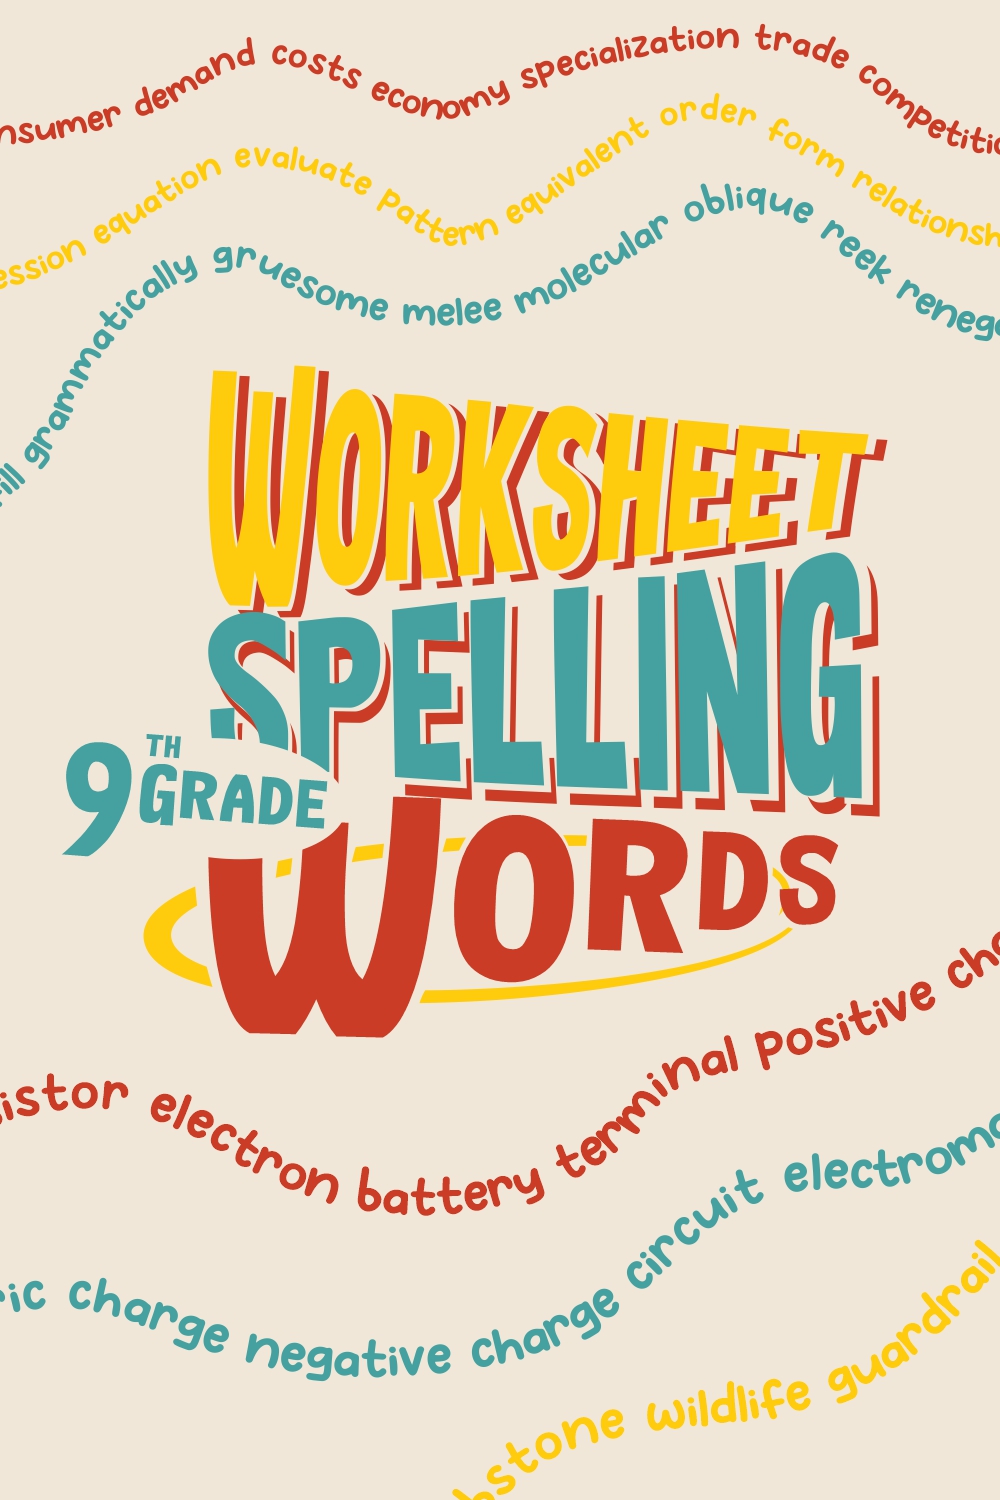 9th Grade Worksheets Spelling Words